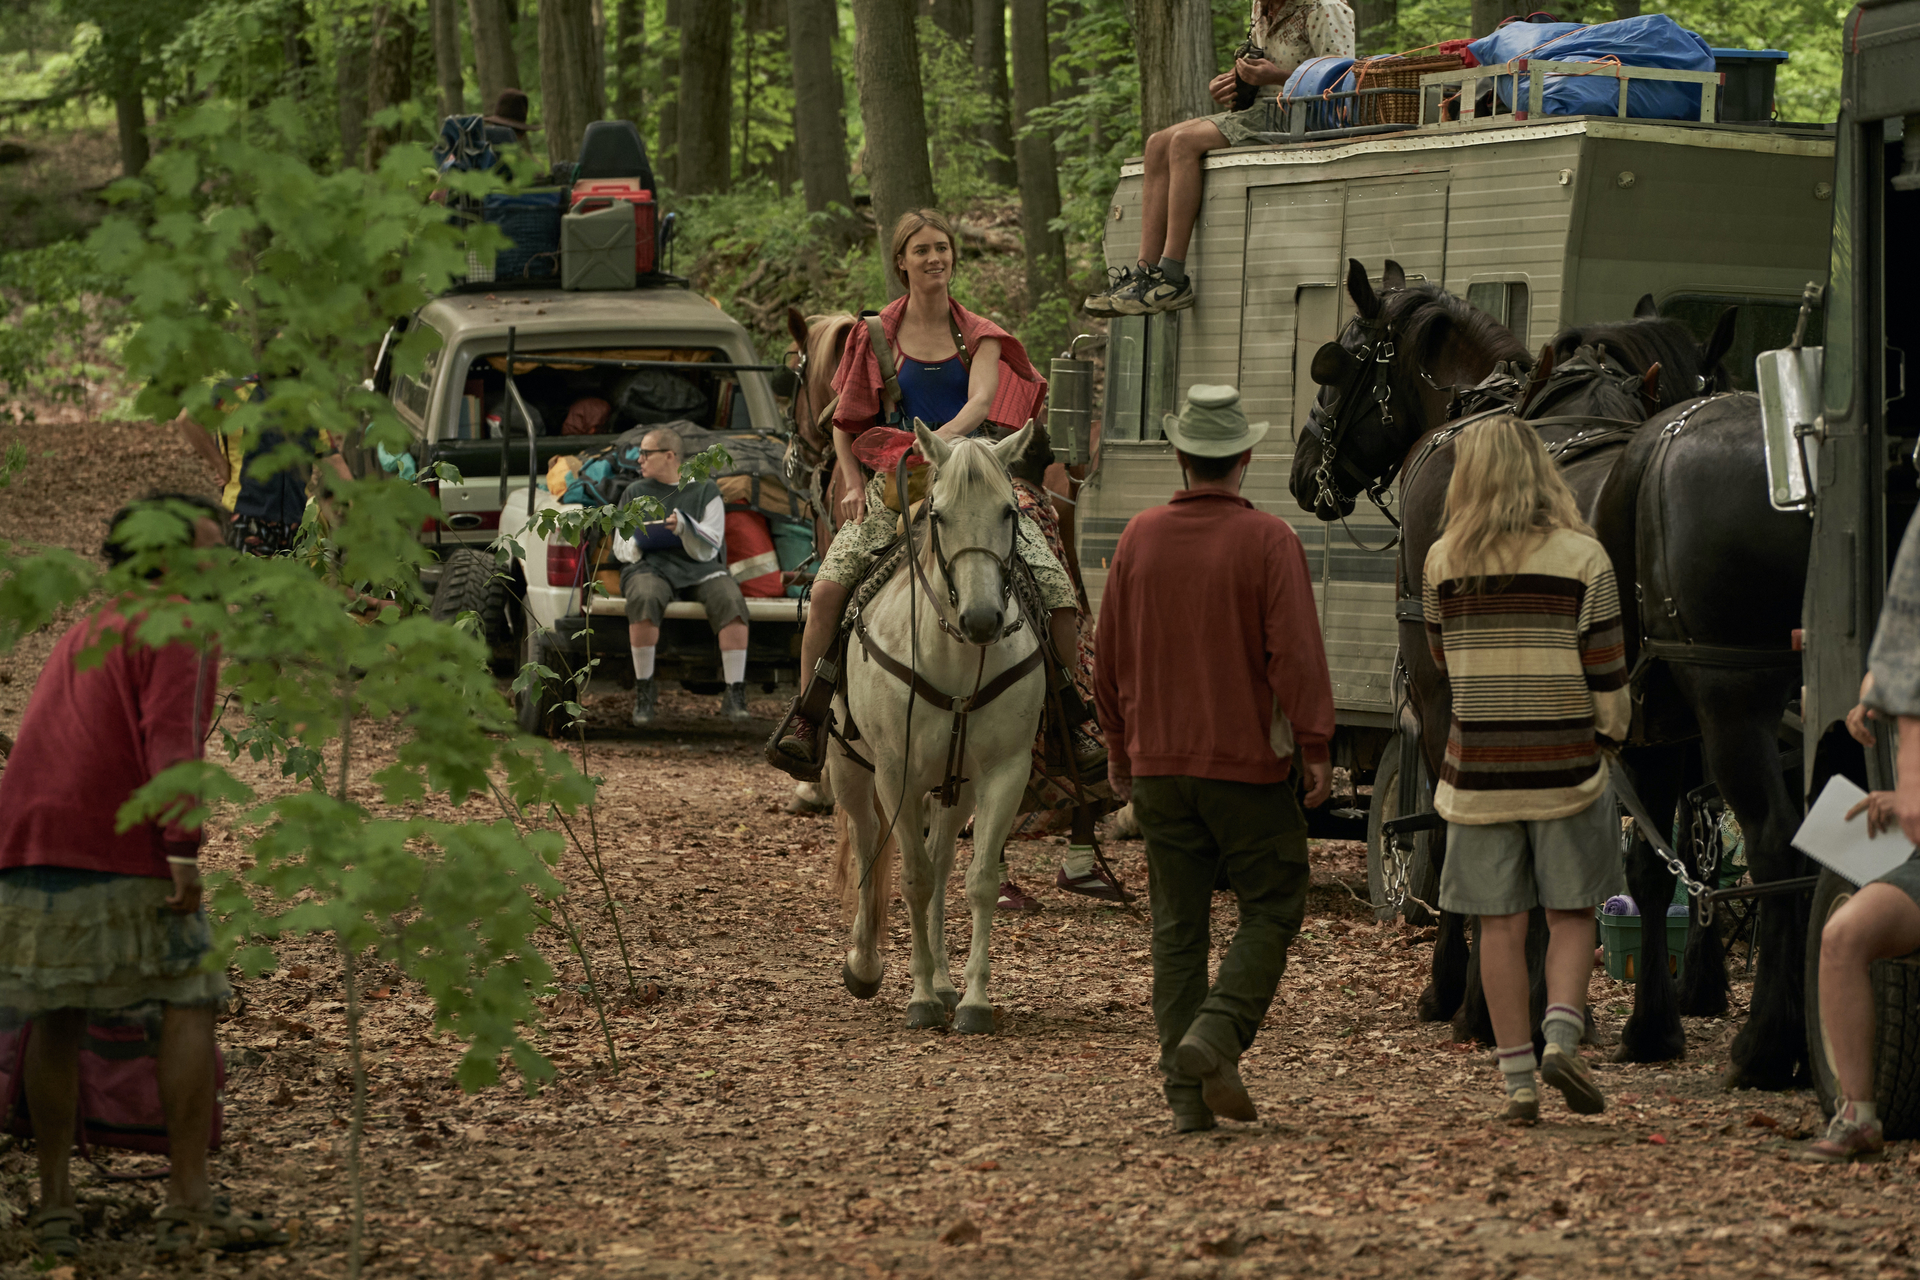 Mackenzie Davis as Kirsten in The Eleventh Station, on horseback passing through a caravan